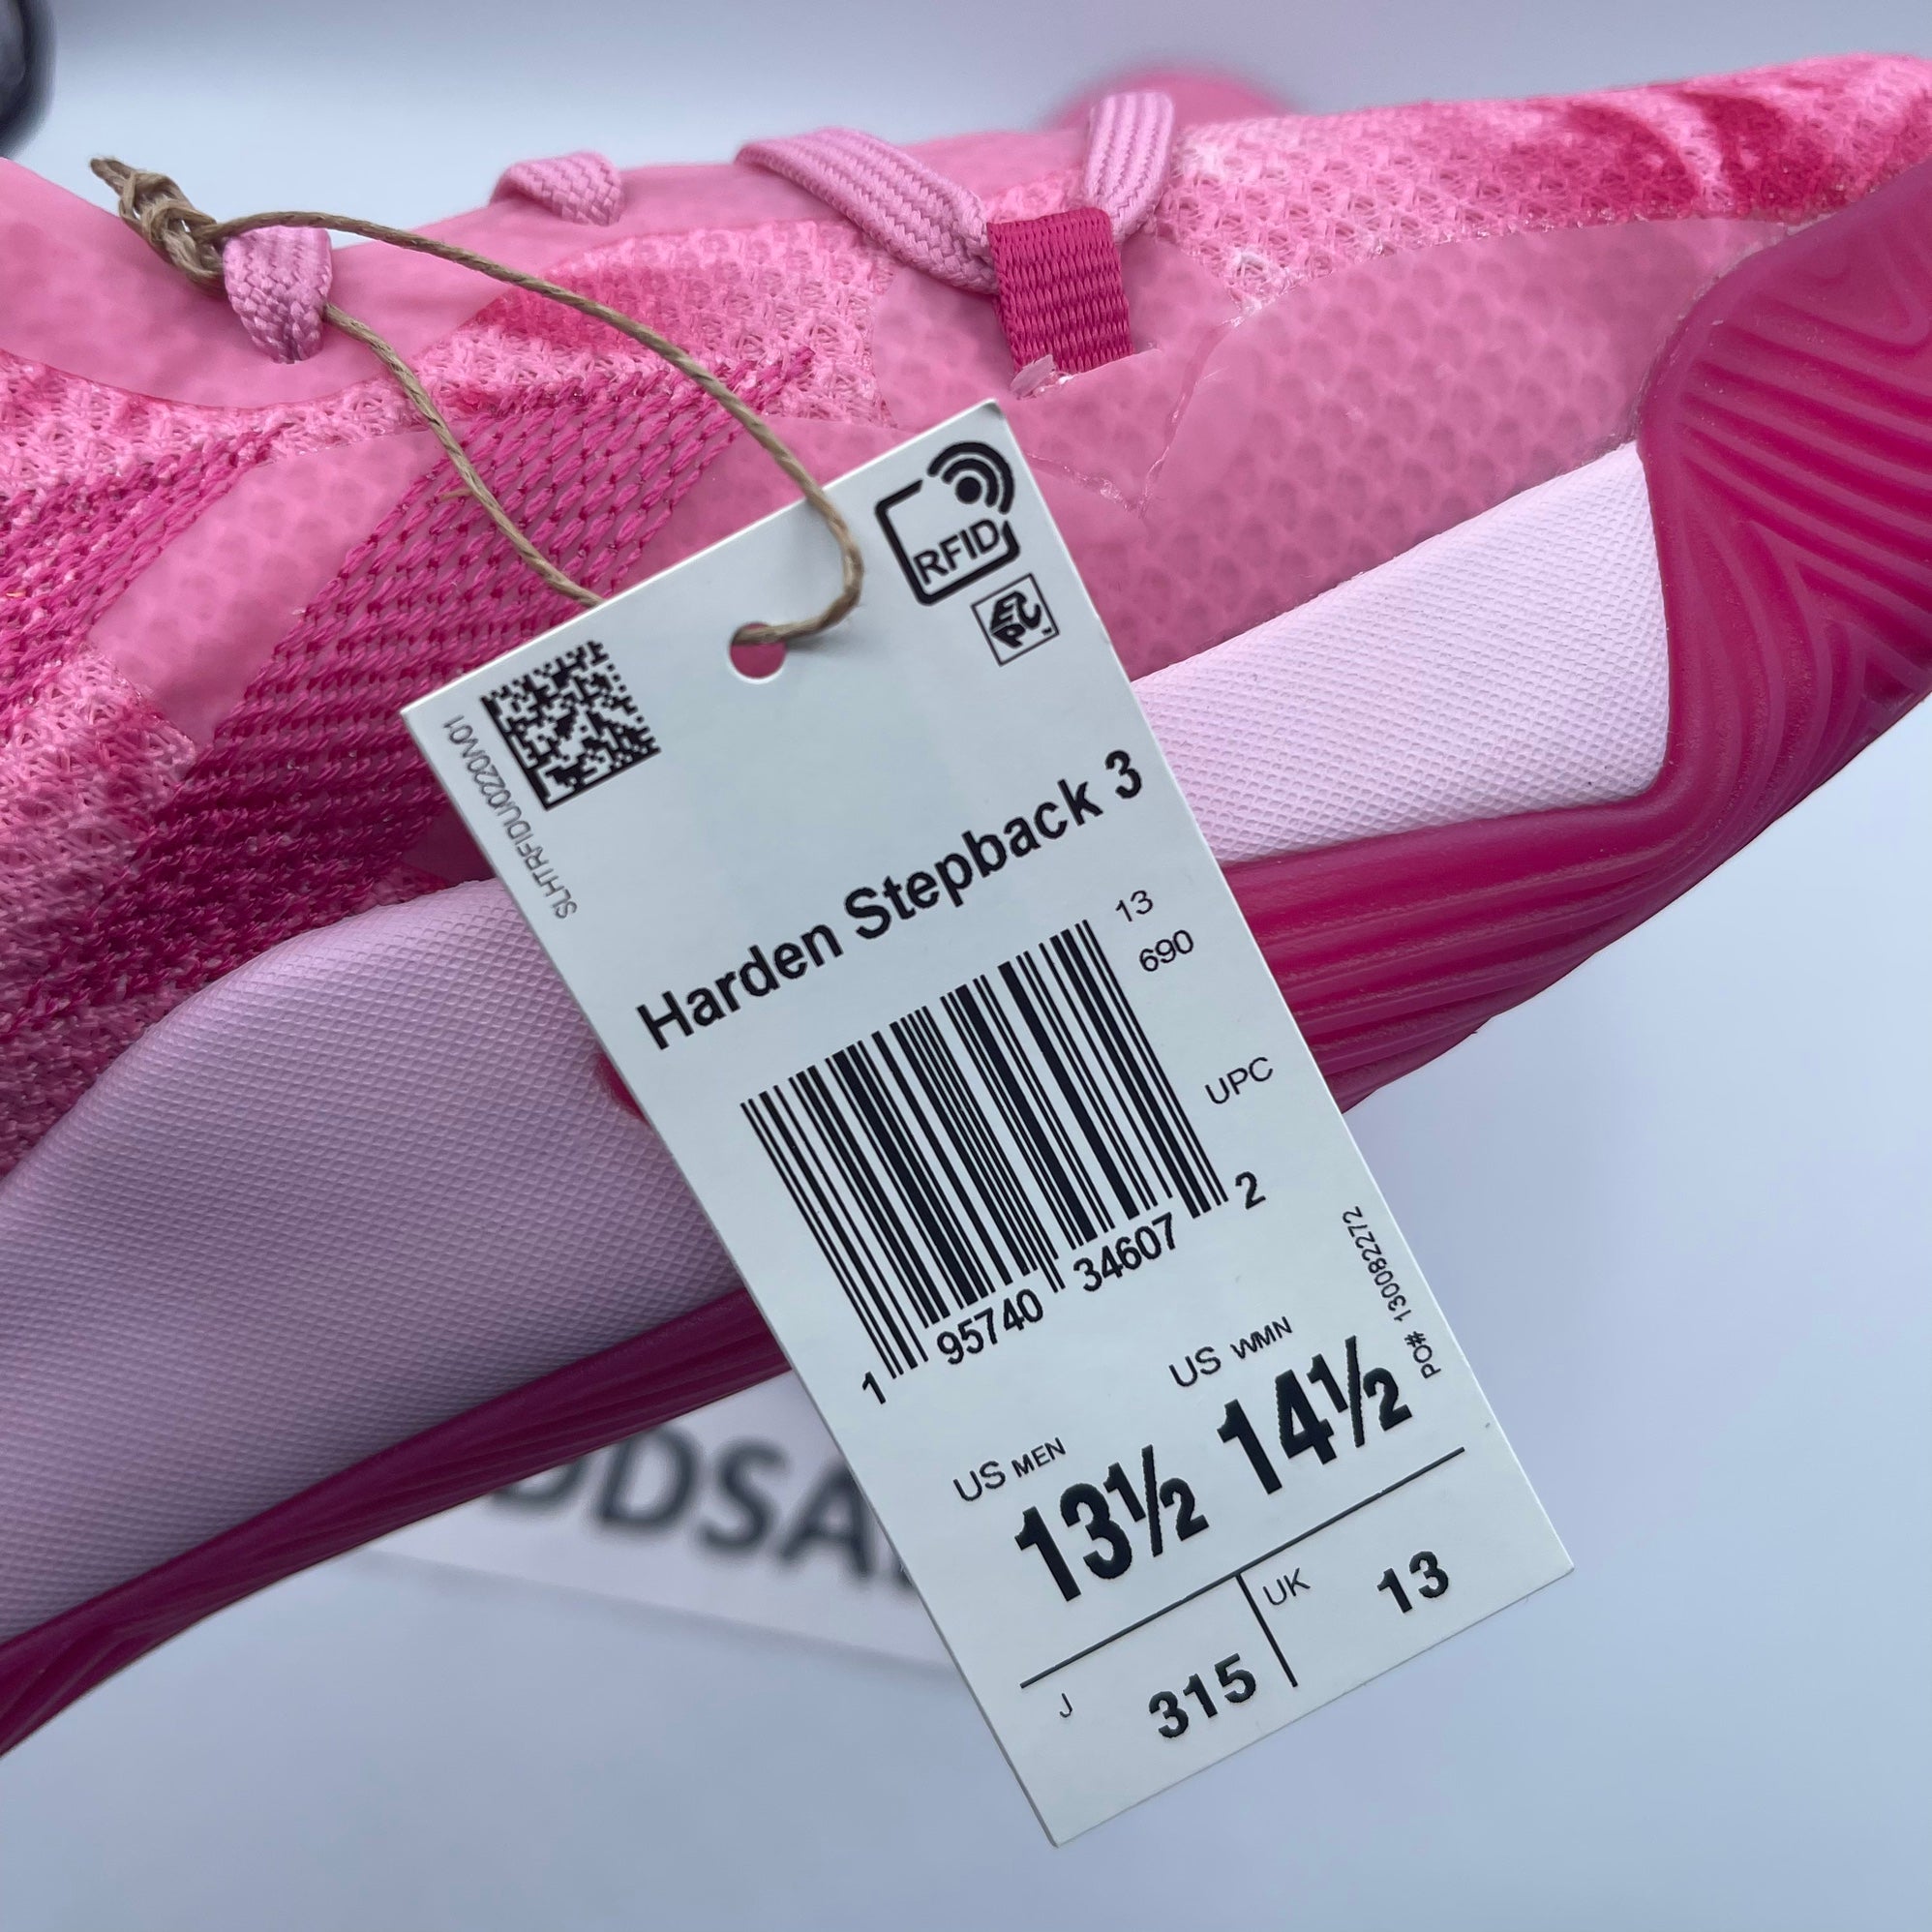 Adidas Harden Stepback 3 'Bliss Pink' | Men's Size 10.5